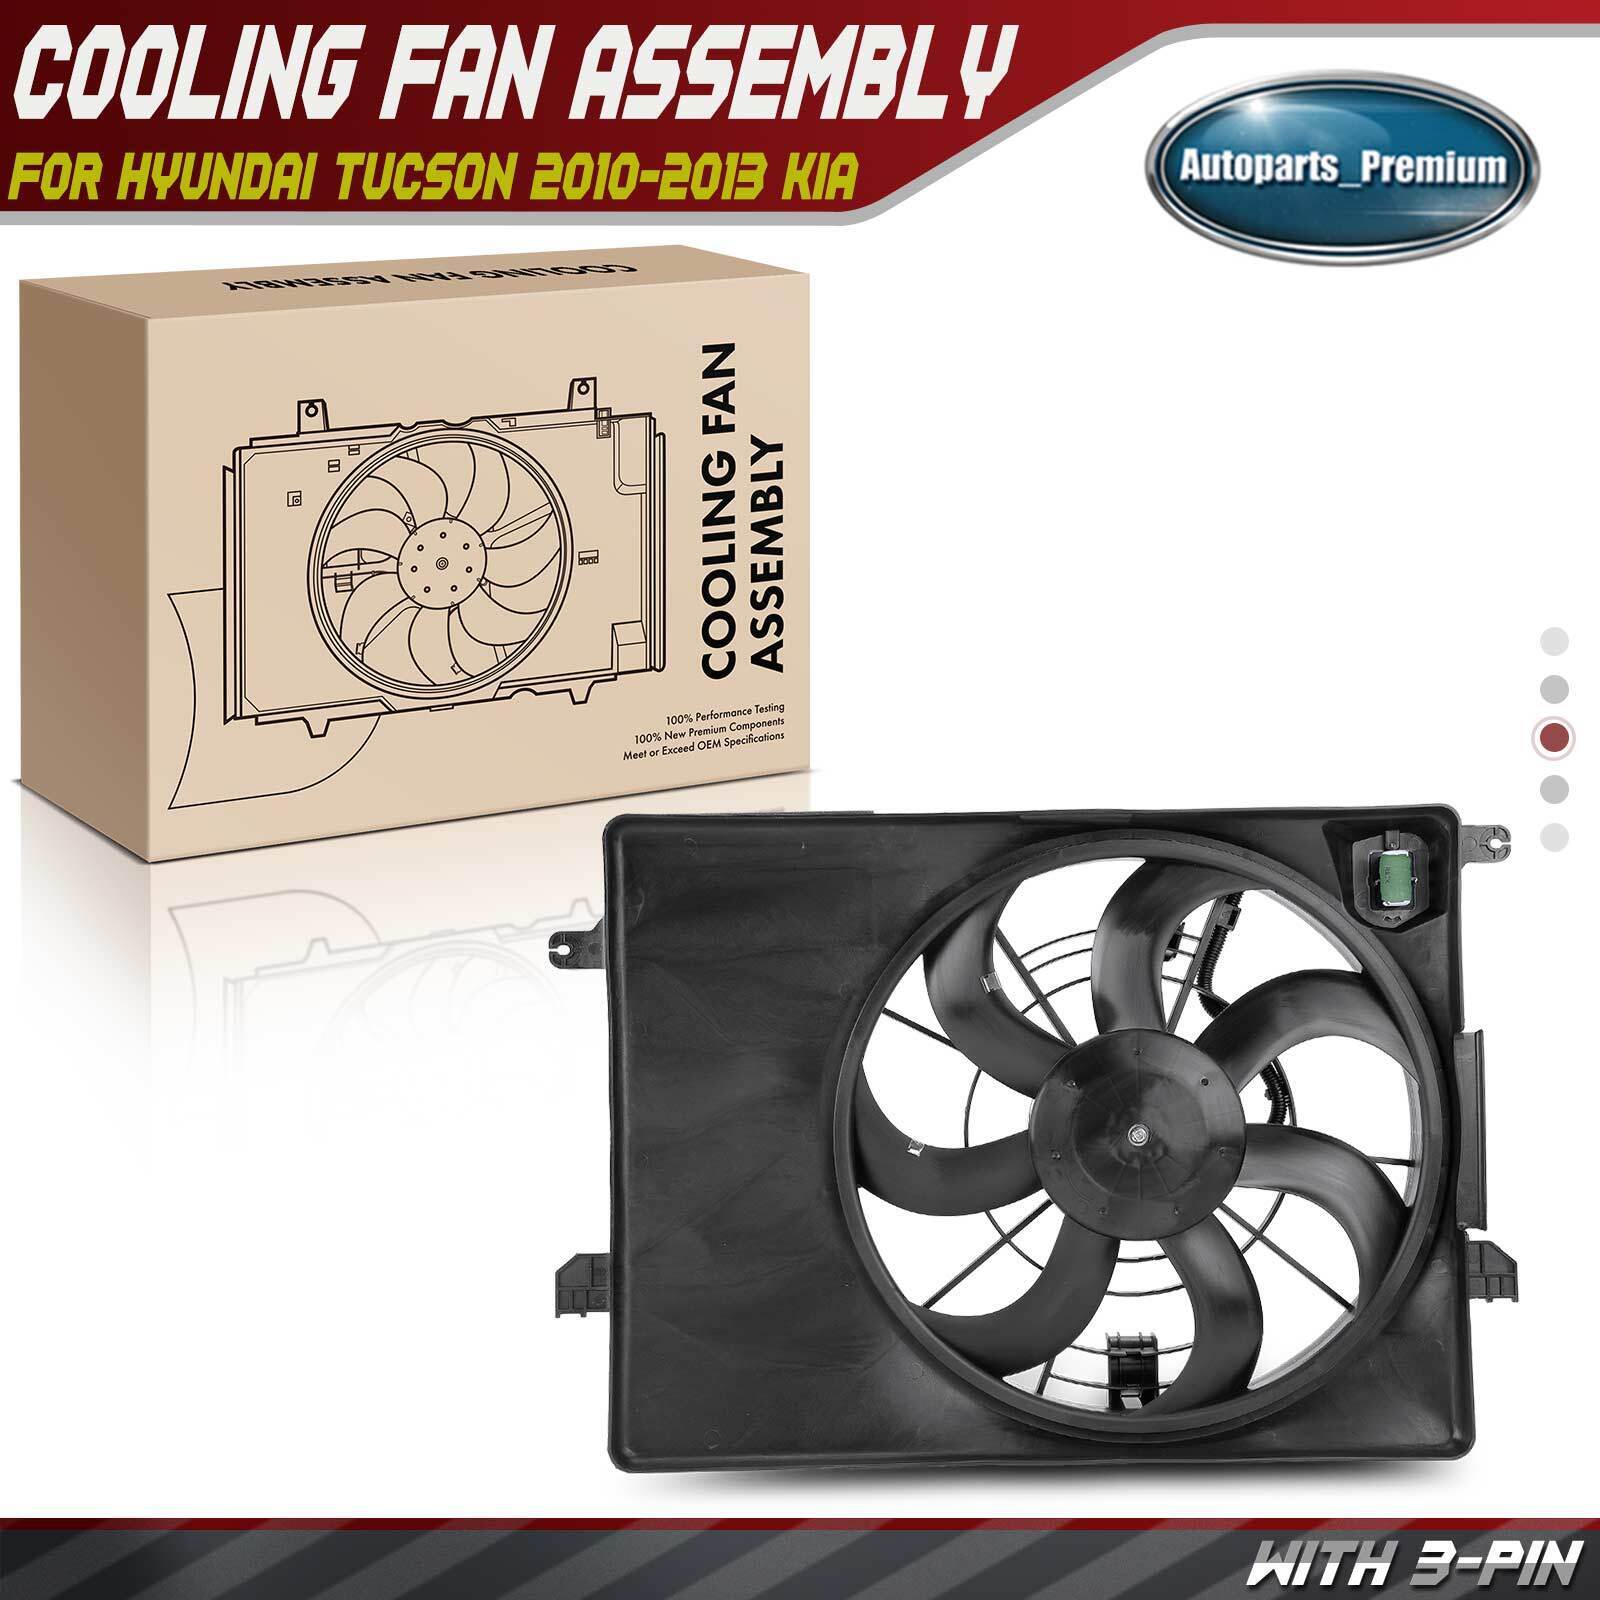 Engine Radiator Cooling Fan w/ Shroud Assembly for Hyundai Tucson 2010-2013 Kia